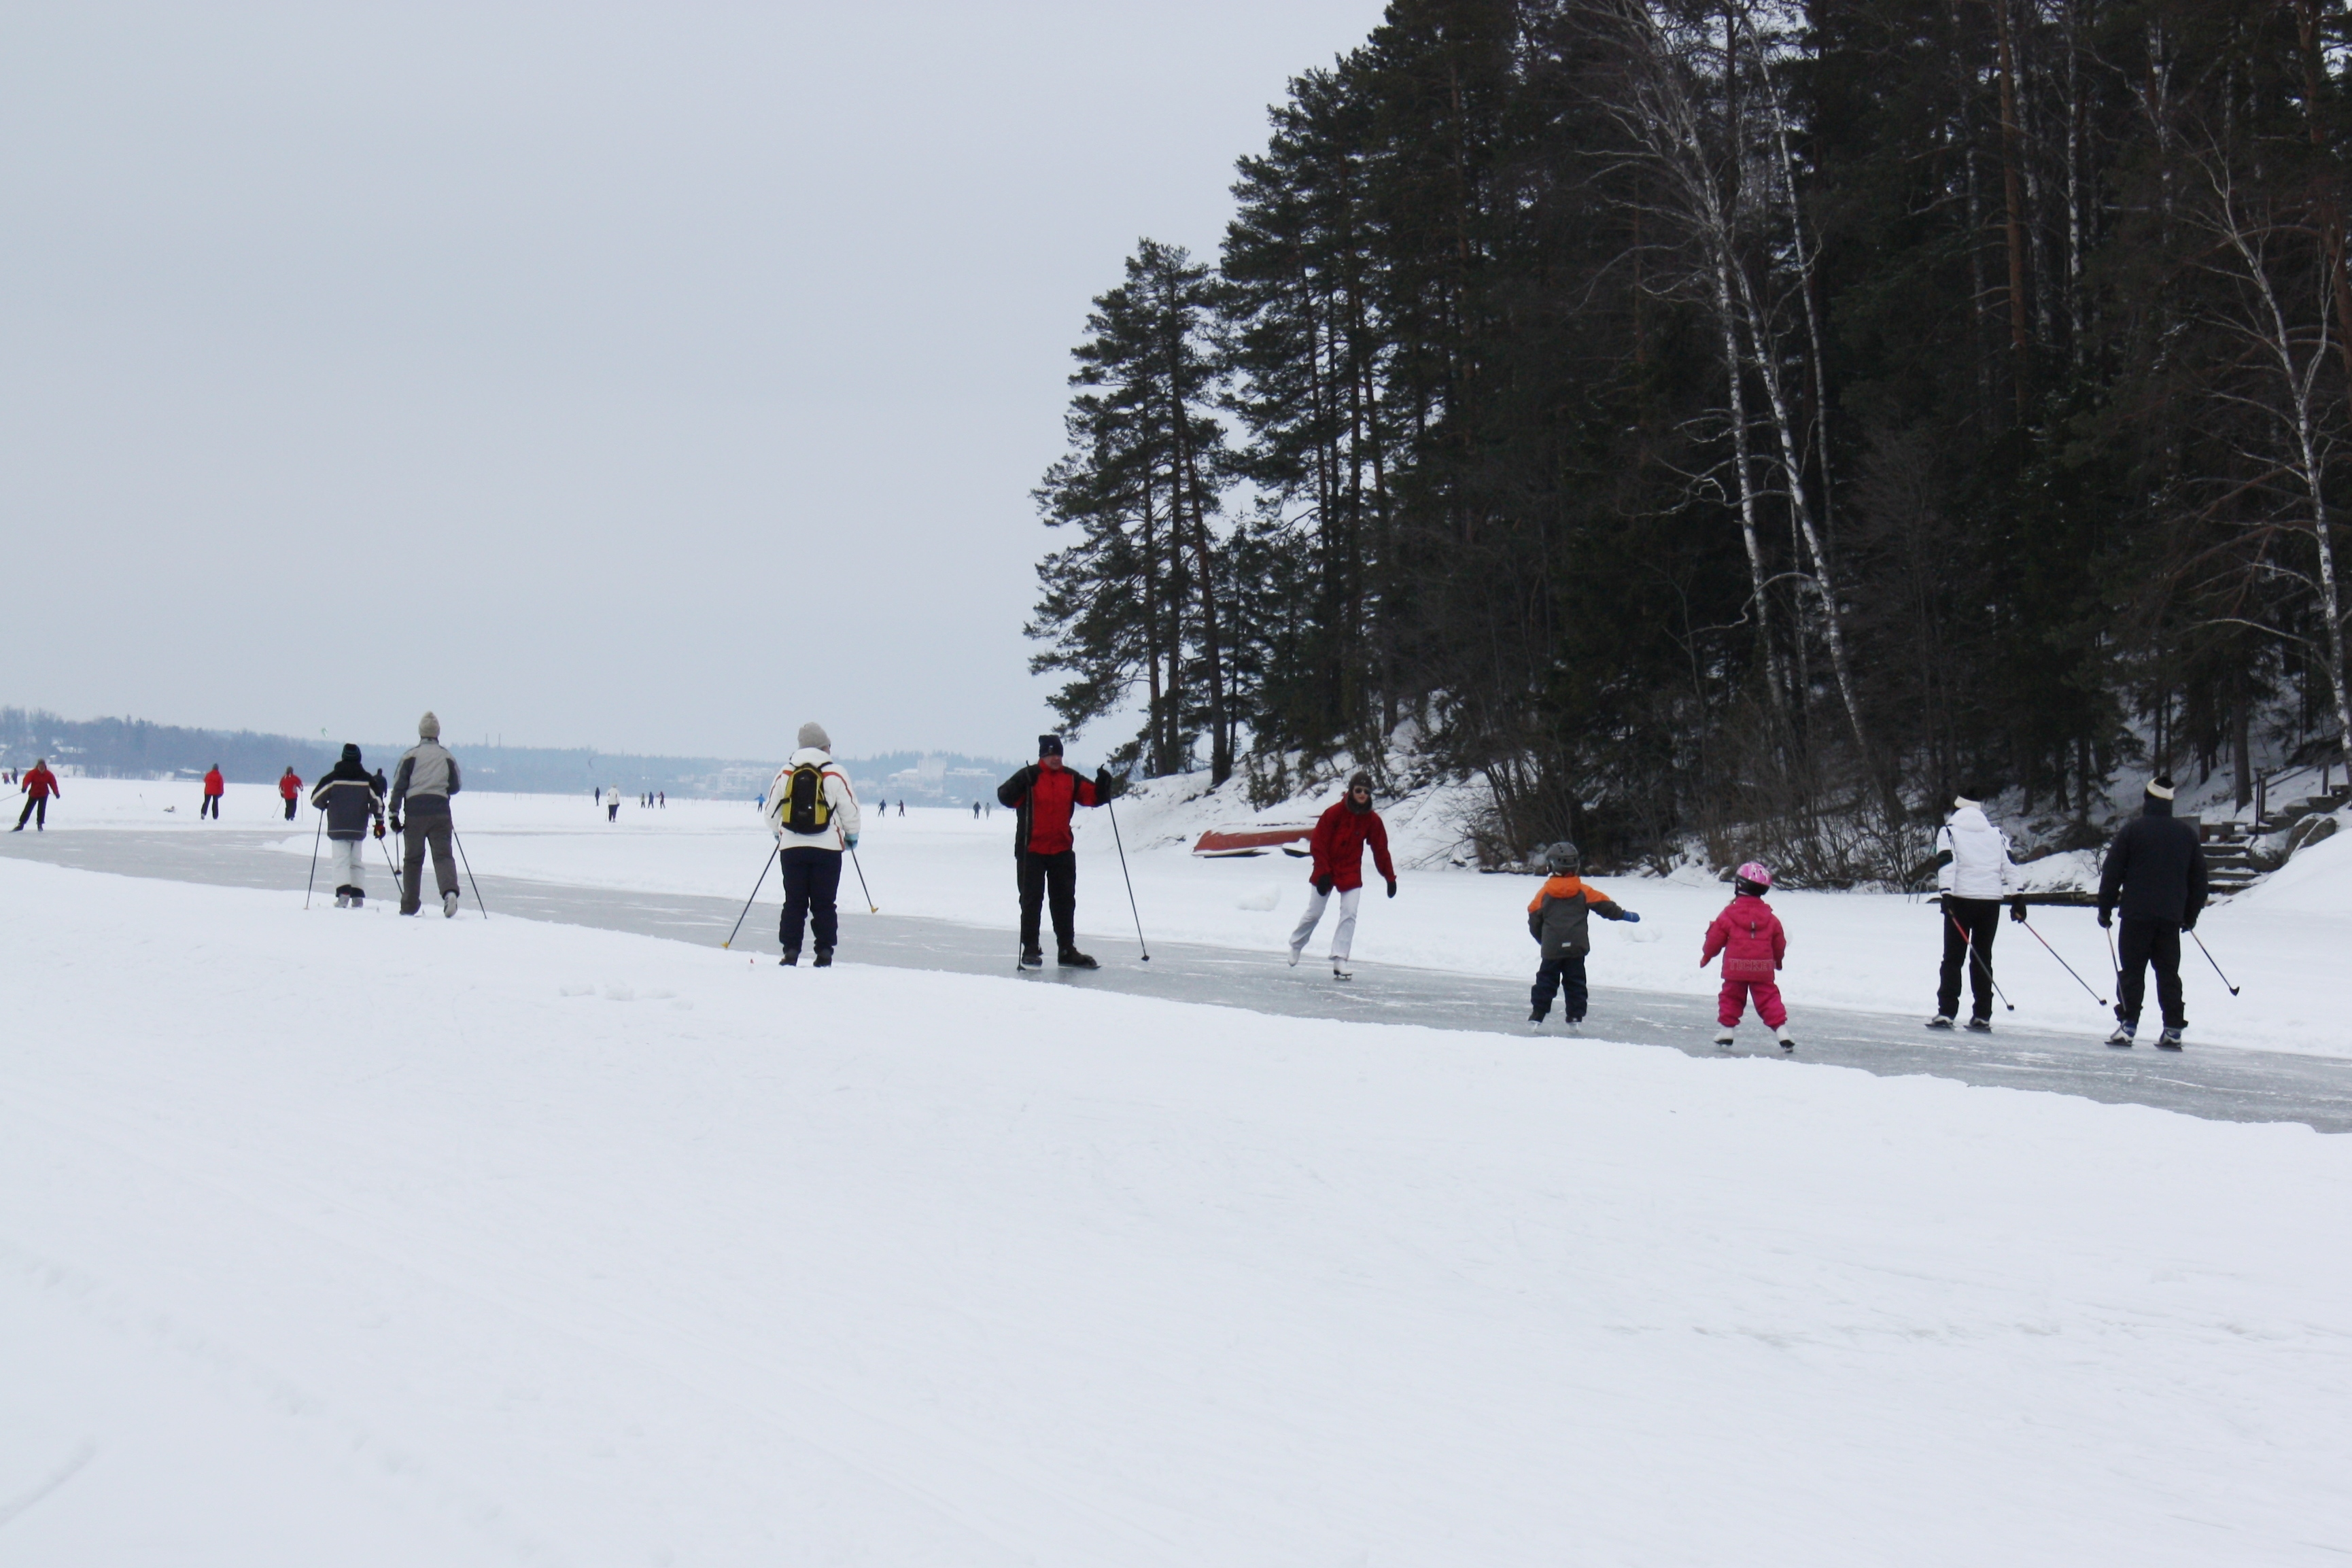 Skiing and ice skating on Lake Tuusulanjärvi I3790 C